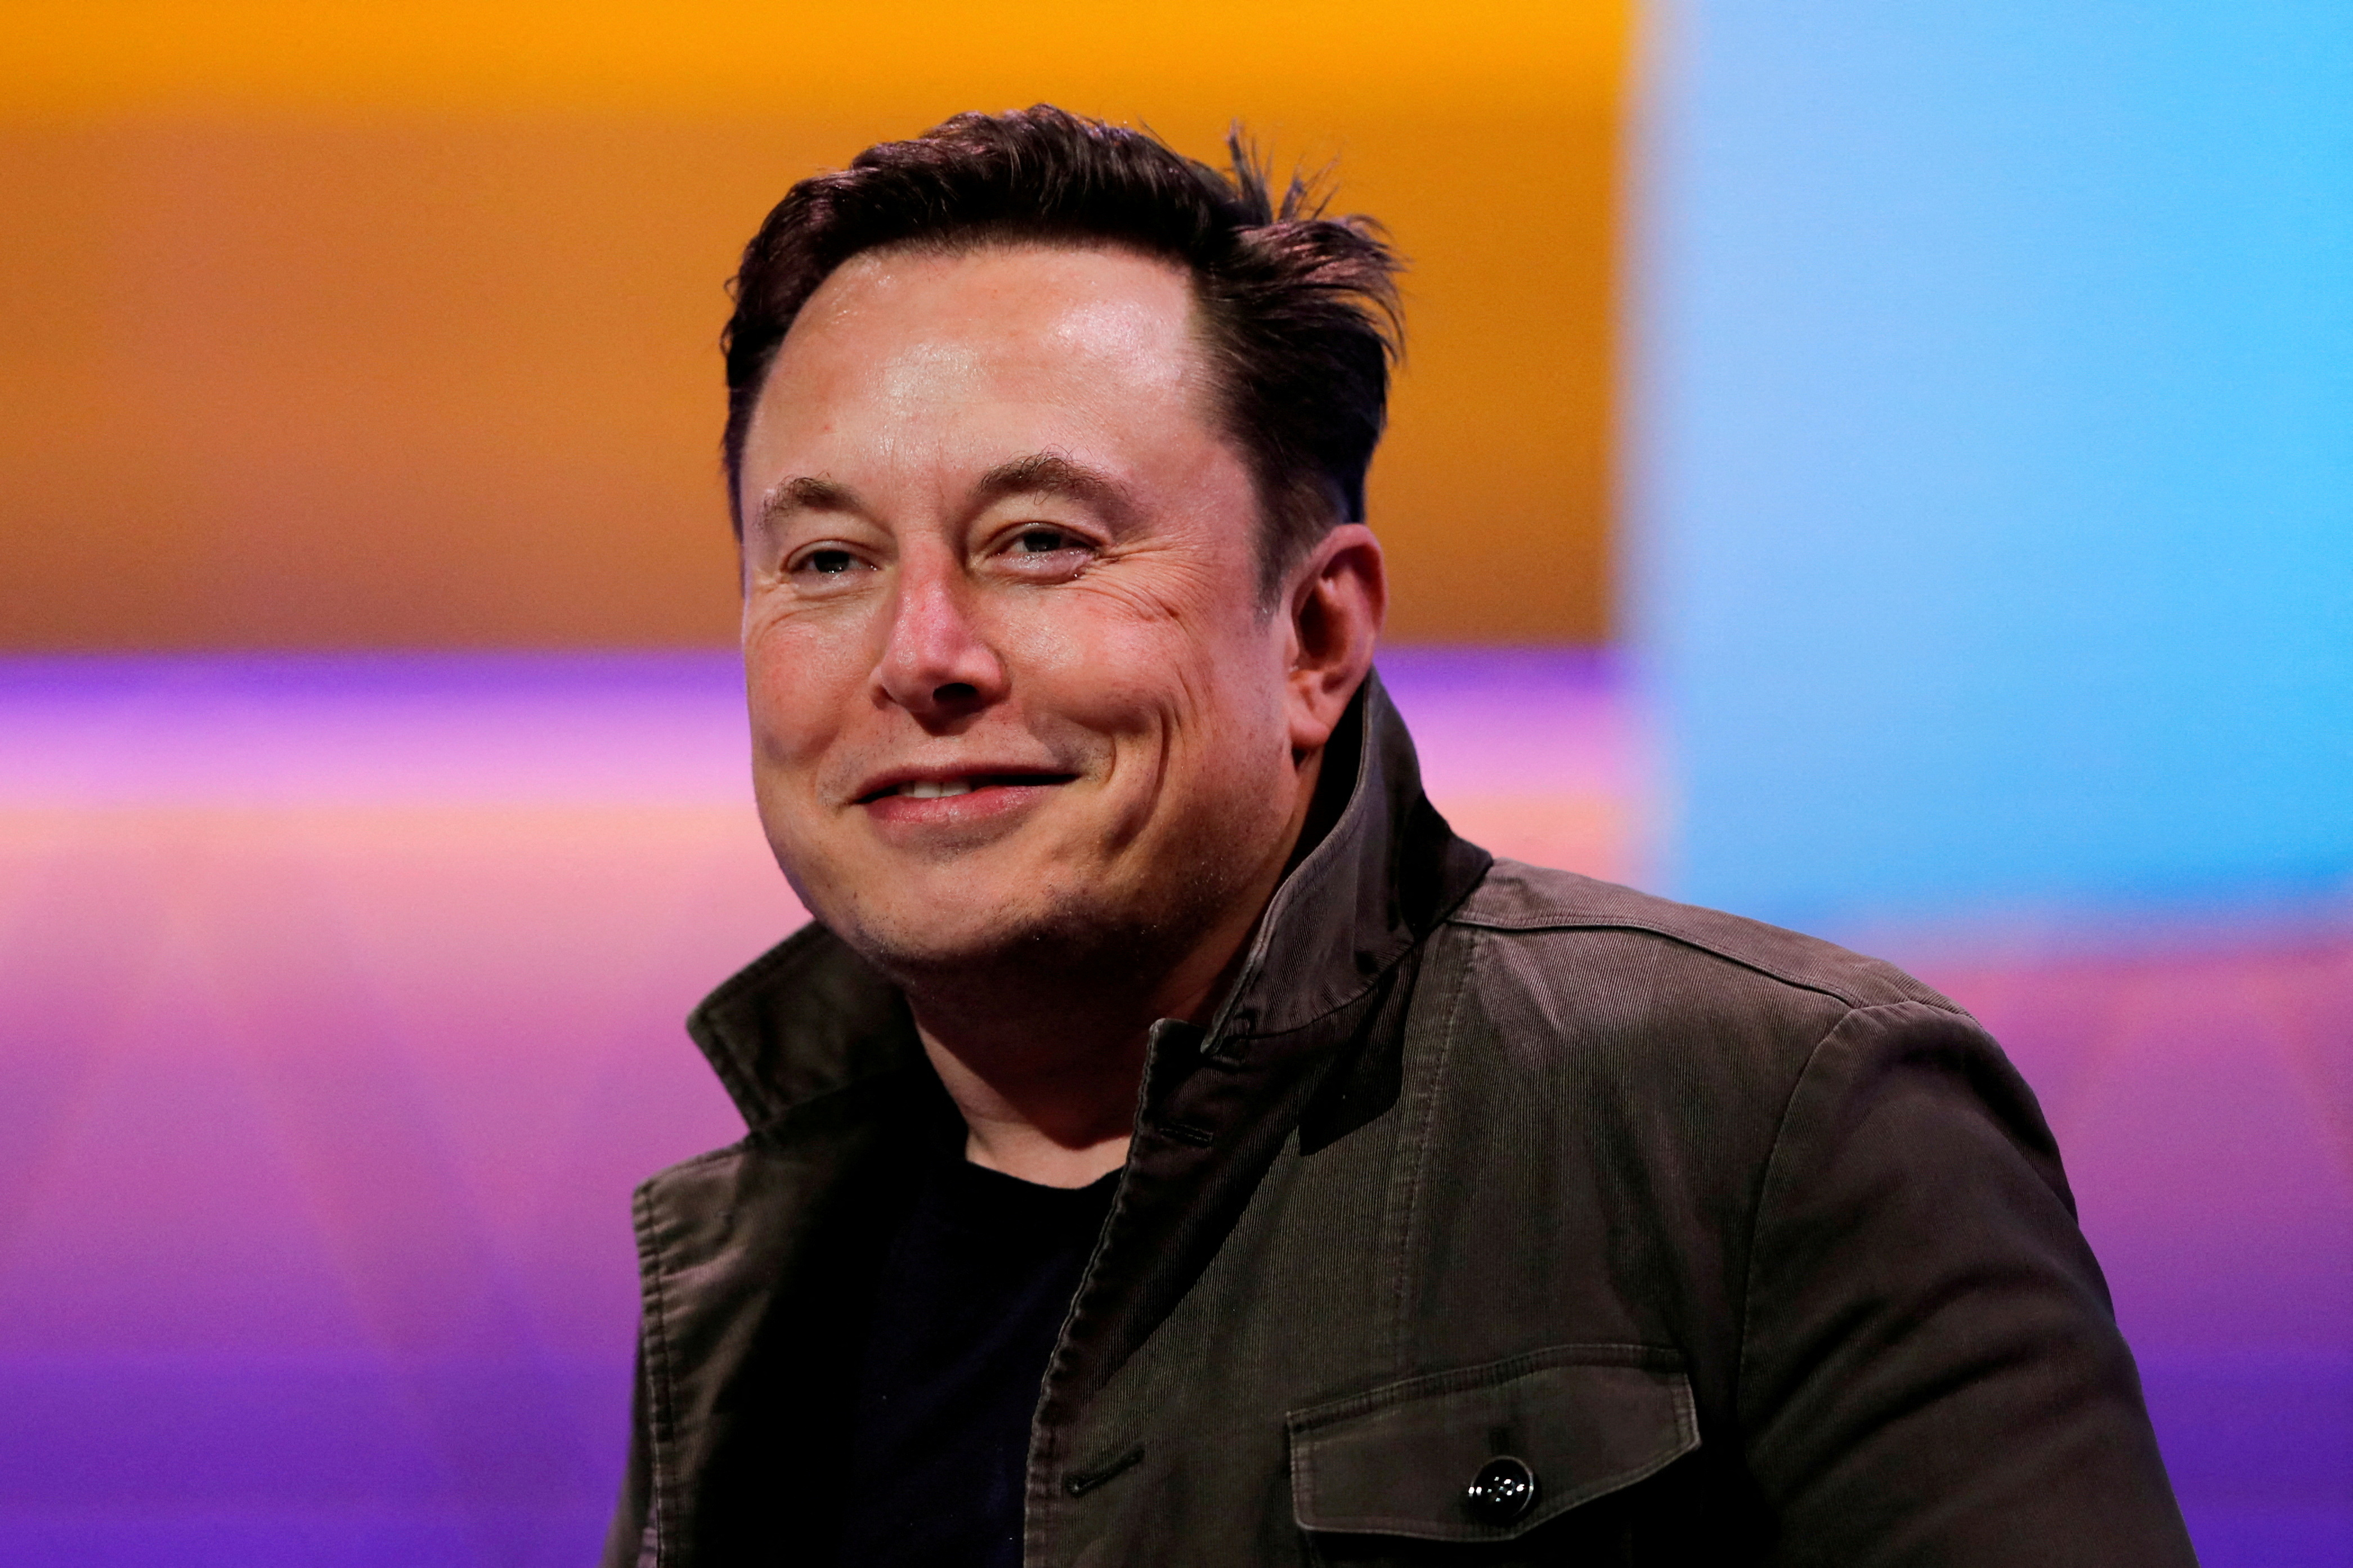 Elon musk smiling